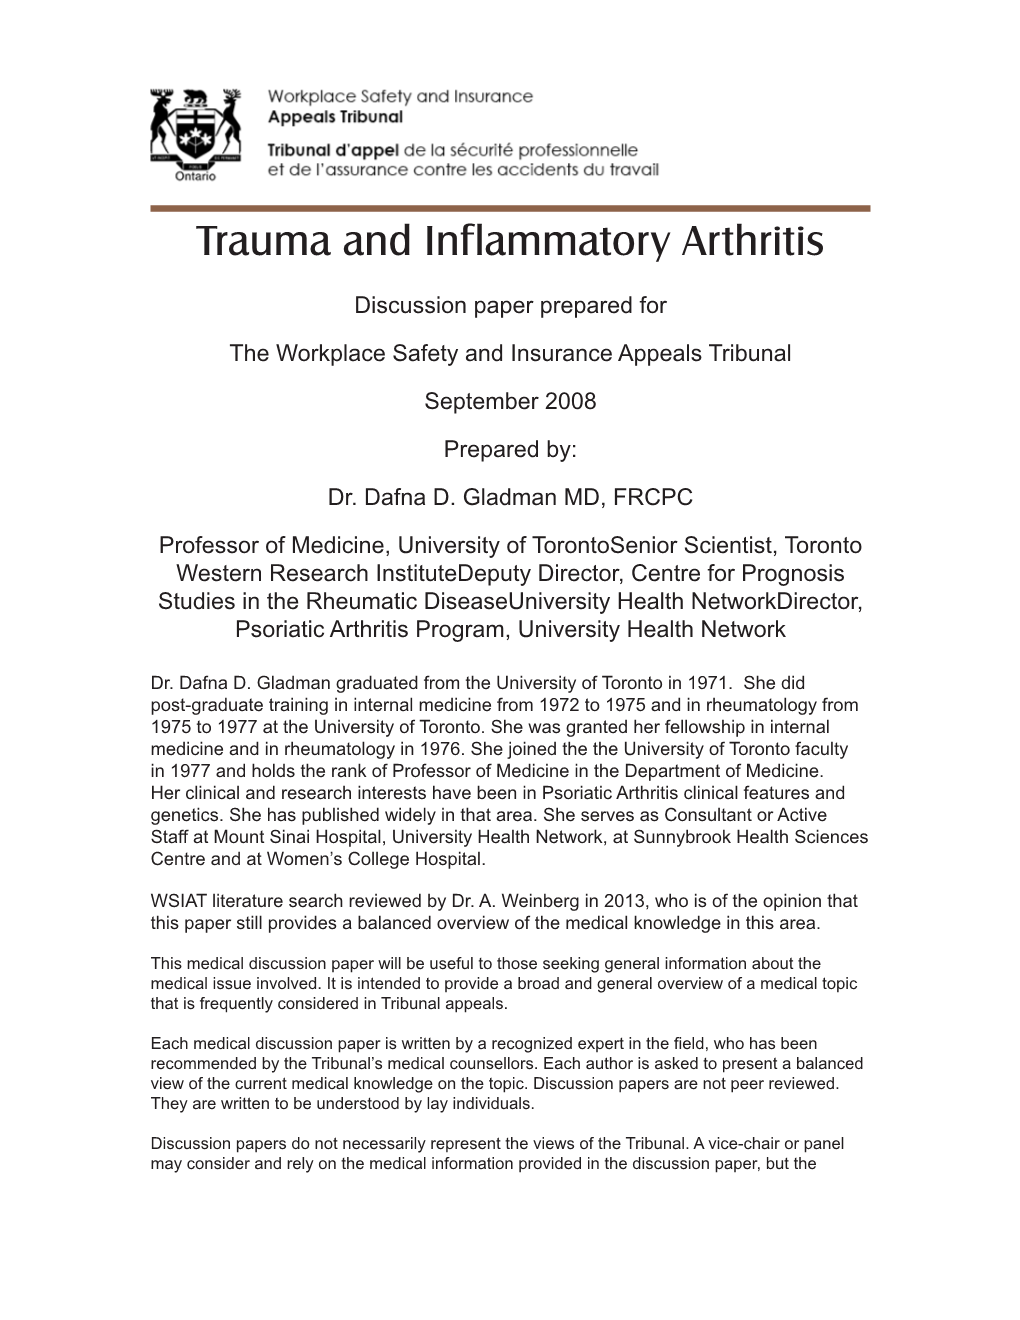 Trauma and Inflammatory Arthritis